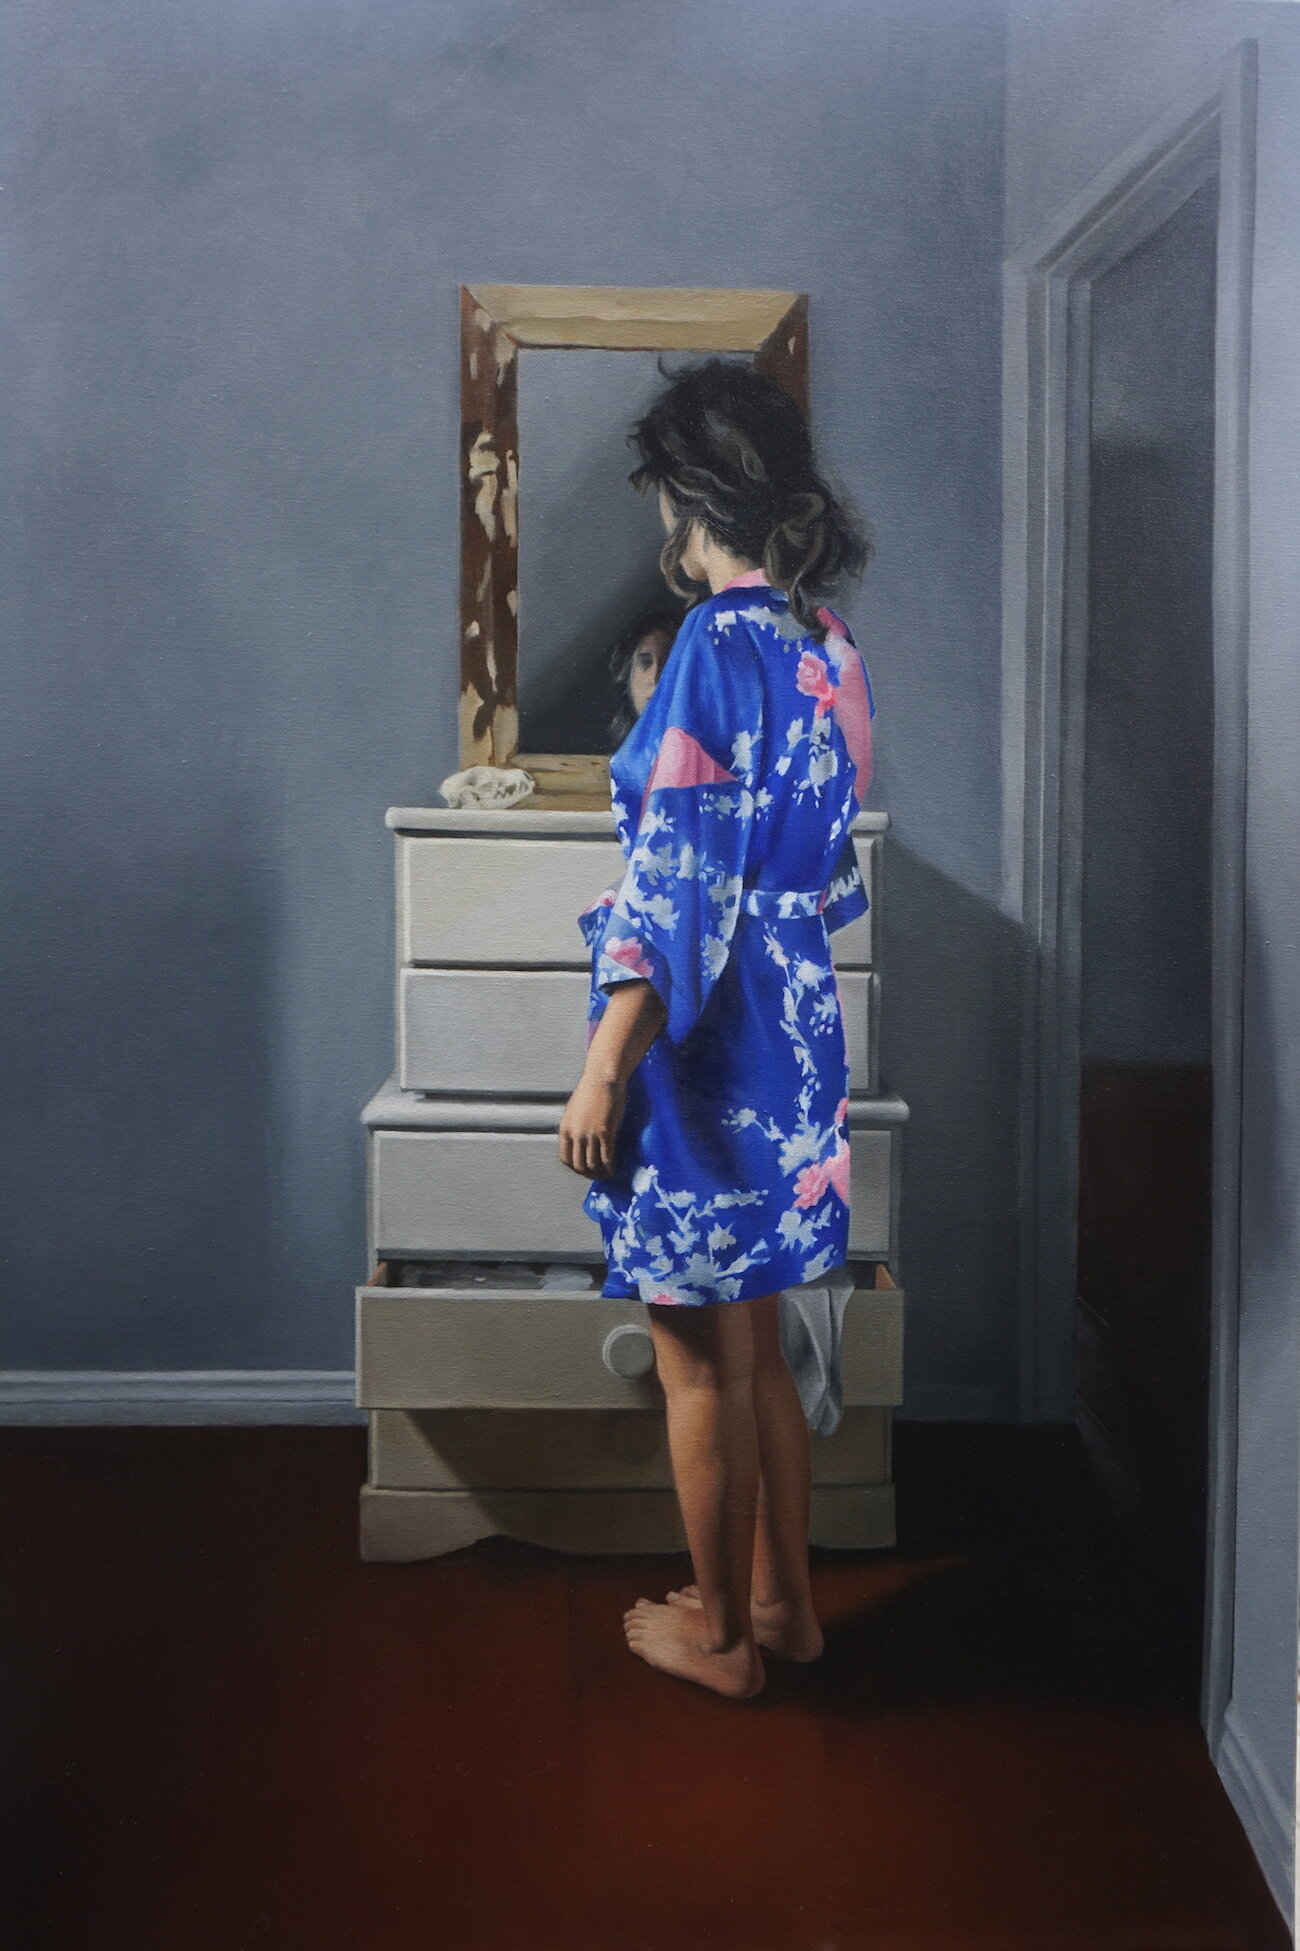 Samira El-Kassis, Self Portrait Through Reflection / Oil on canvas/ 2019 / 24x36 